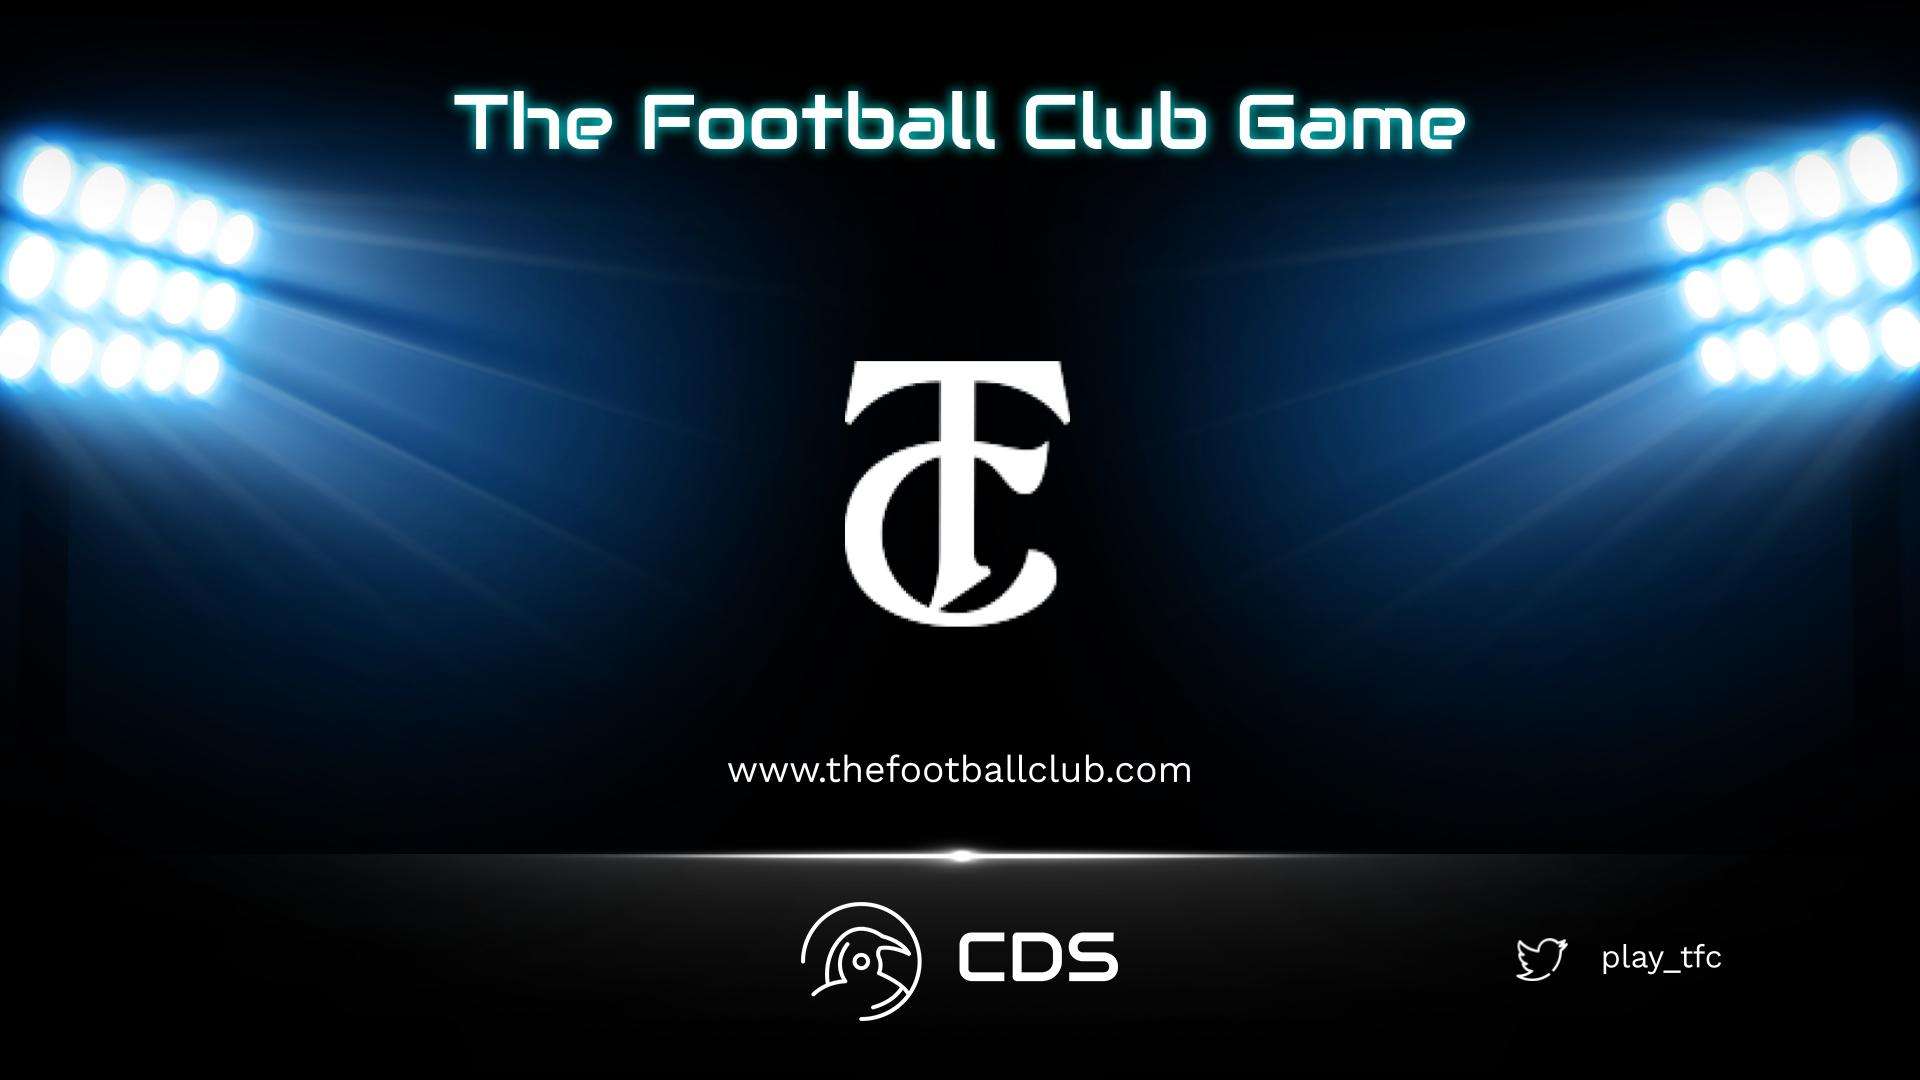 The Football Club Game